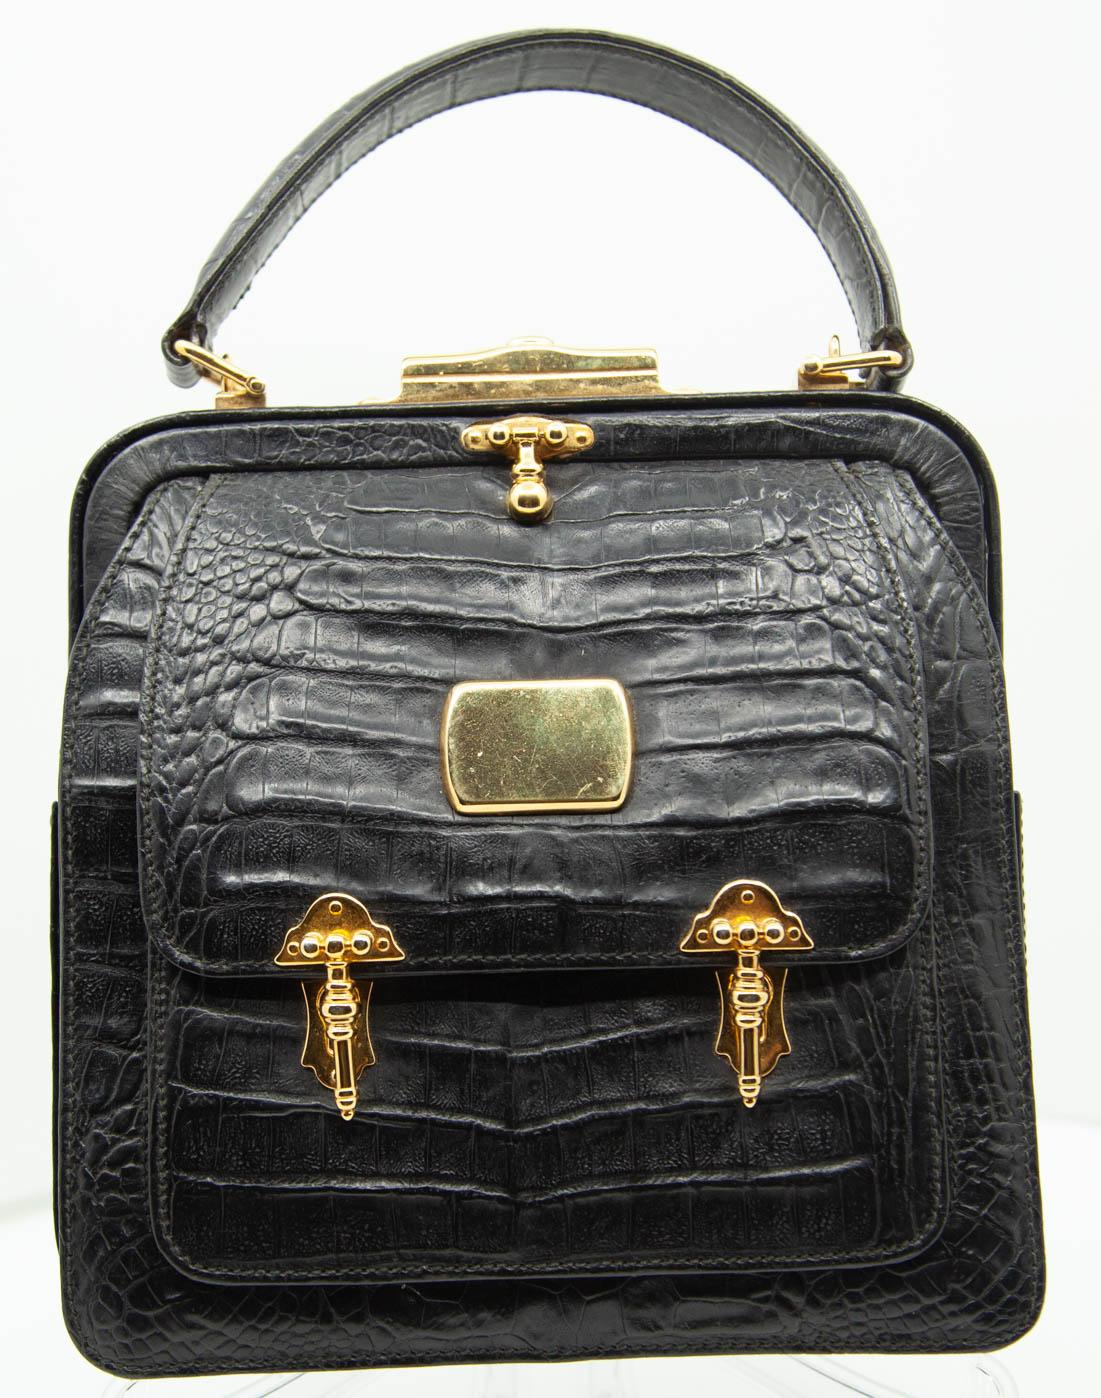 Vintage Valentino sac à main en alligator noir vintage c1960s

7.5